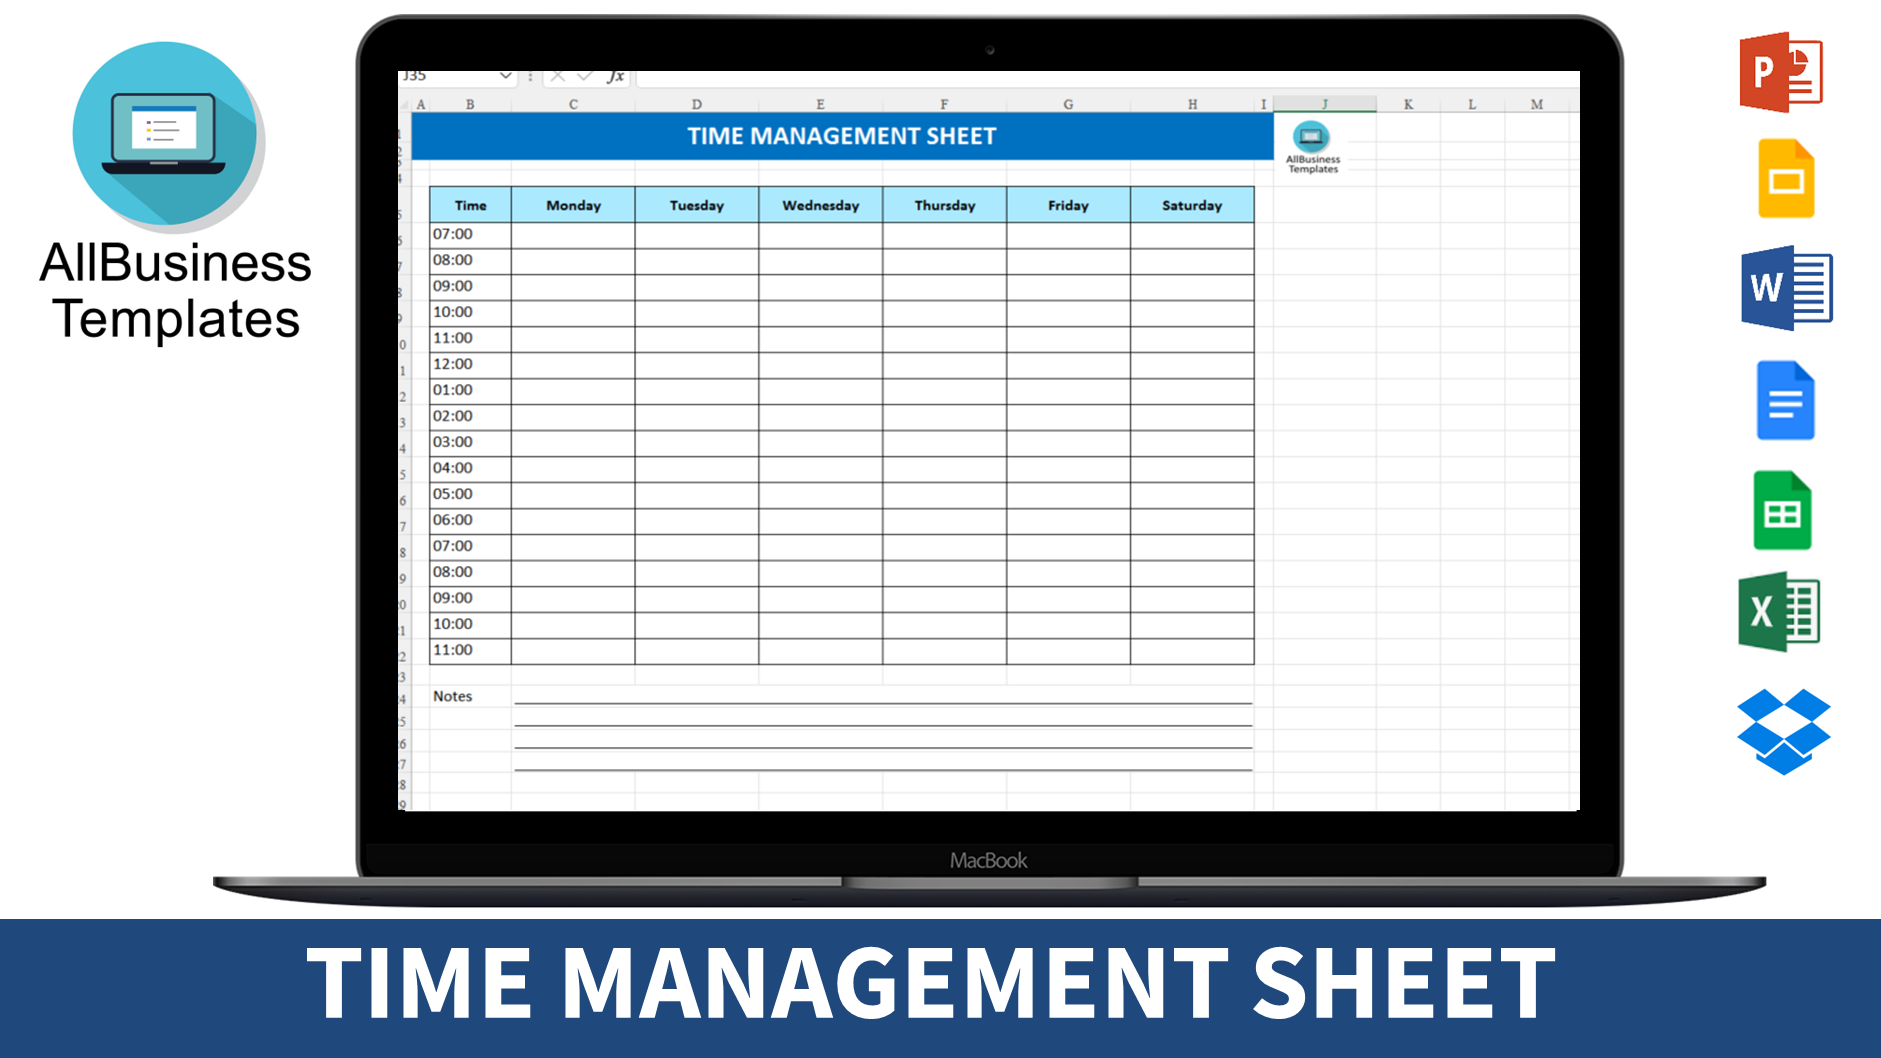 Time Management Sheet main image